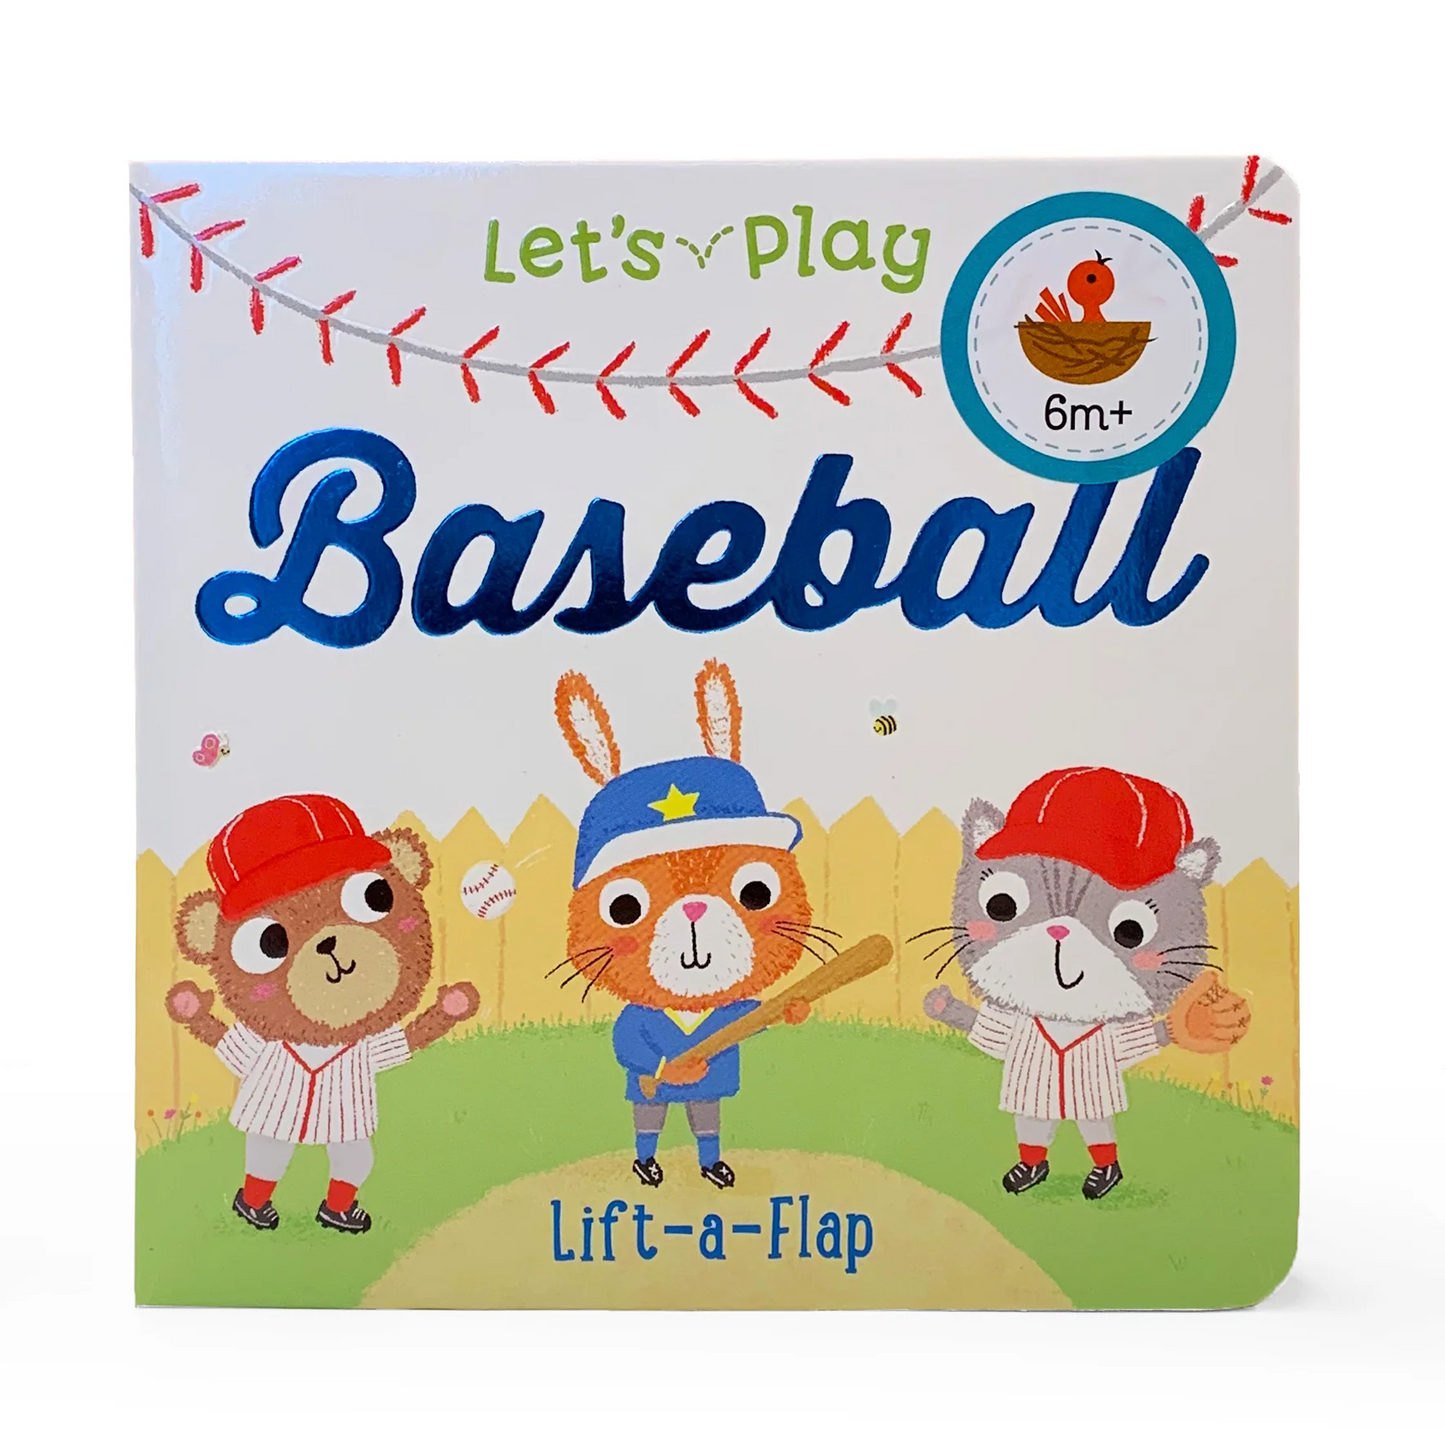 Let’s Play Baseball